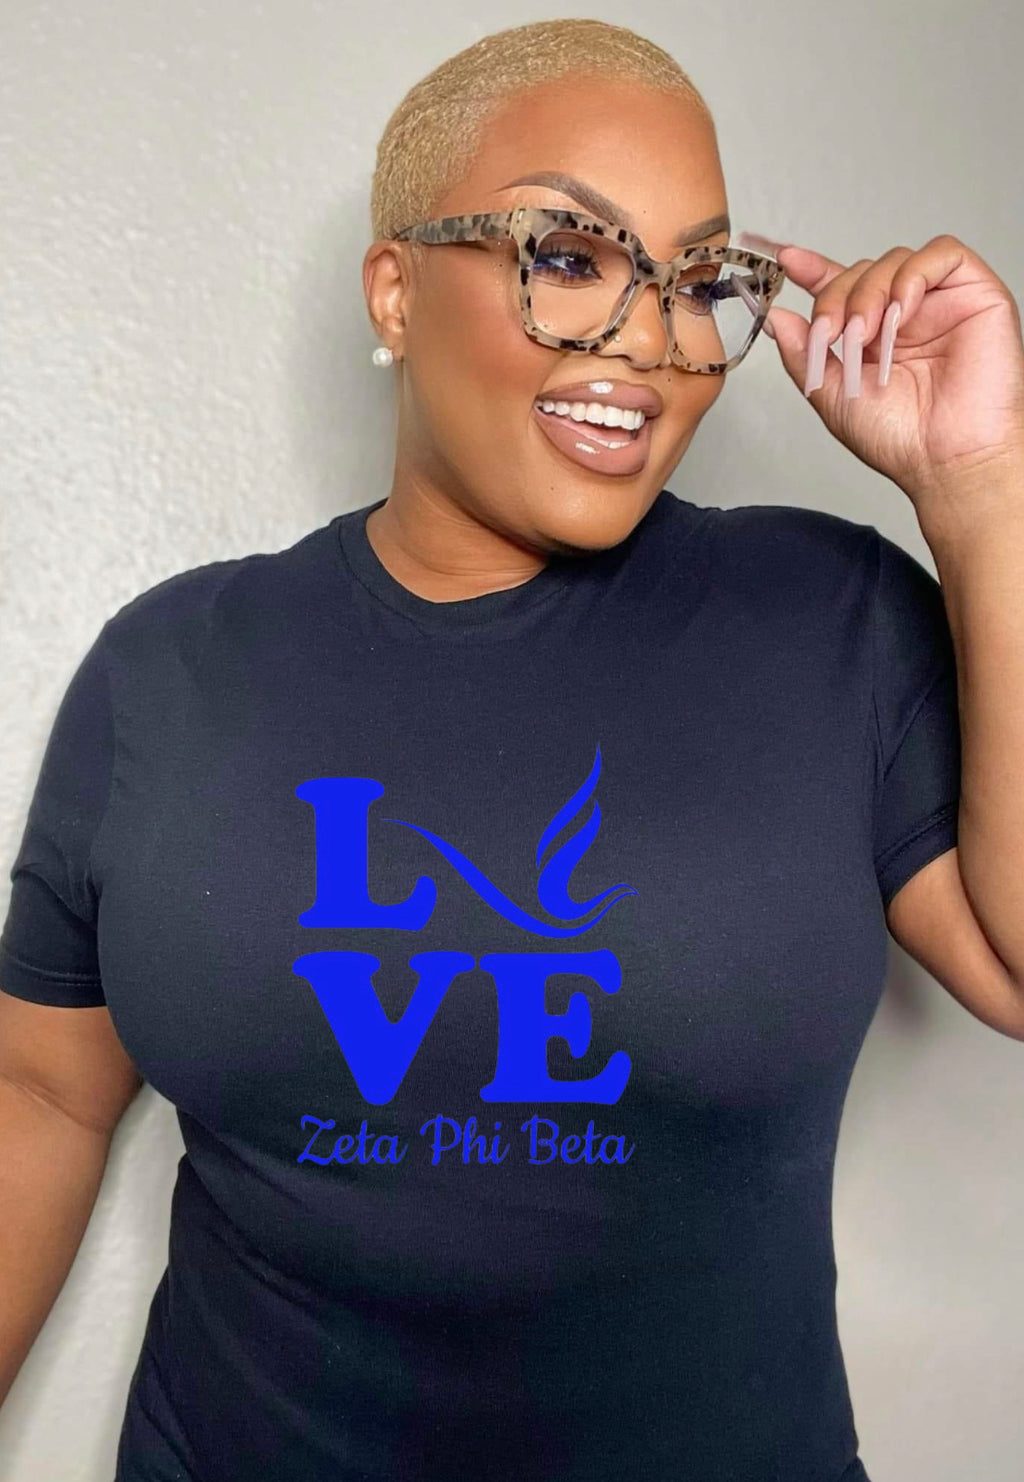 Zeta Love